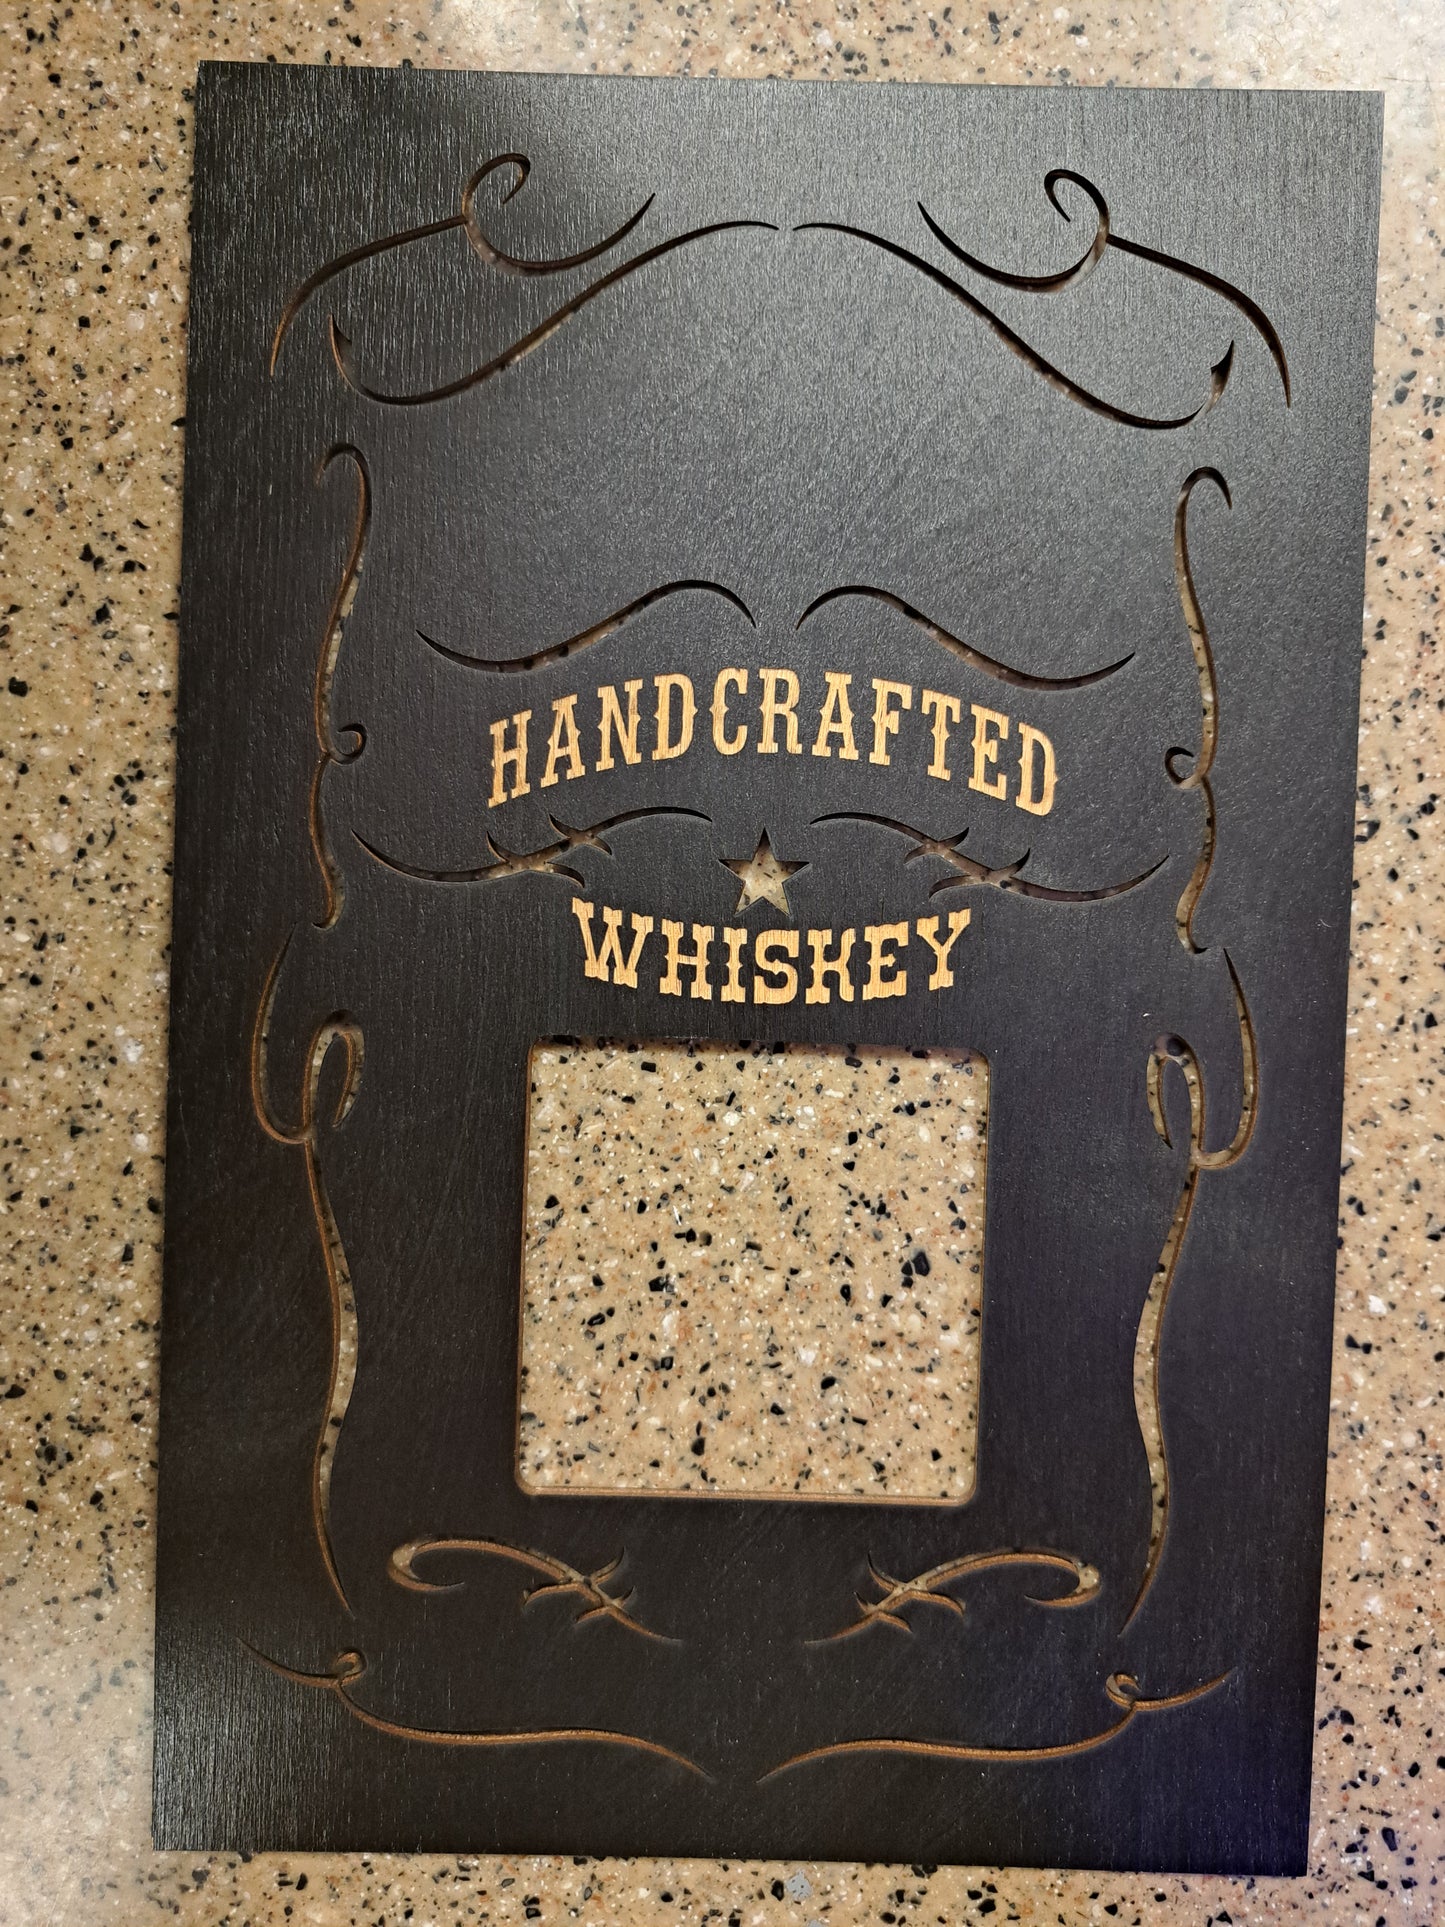 Whiskey Box - Gray, Short Bottle, 750ml